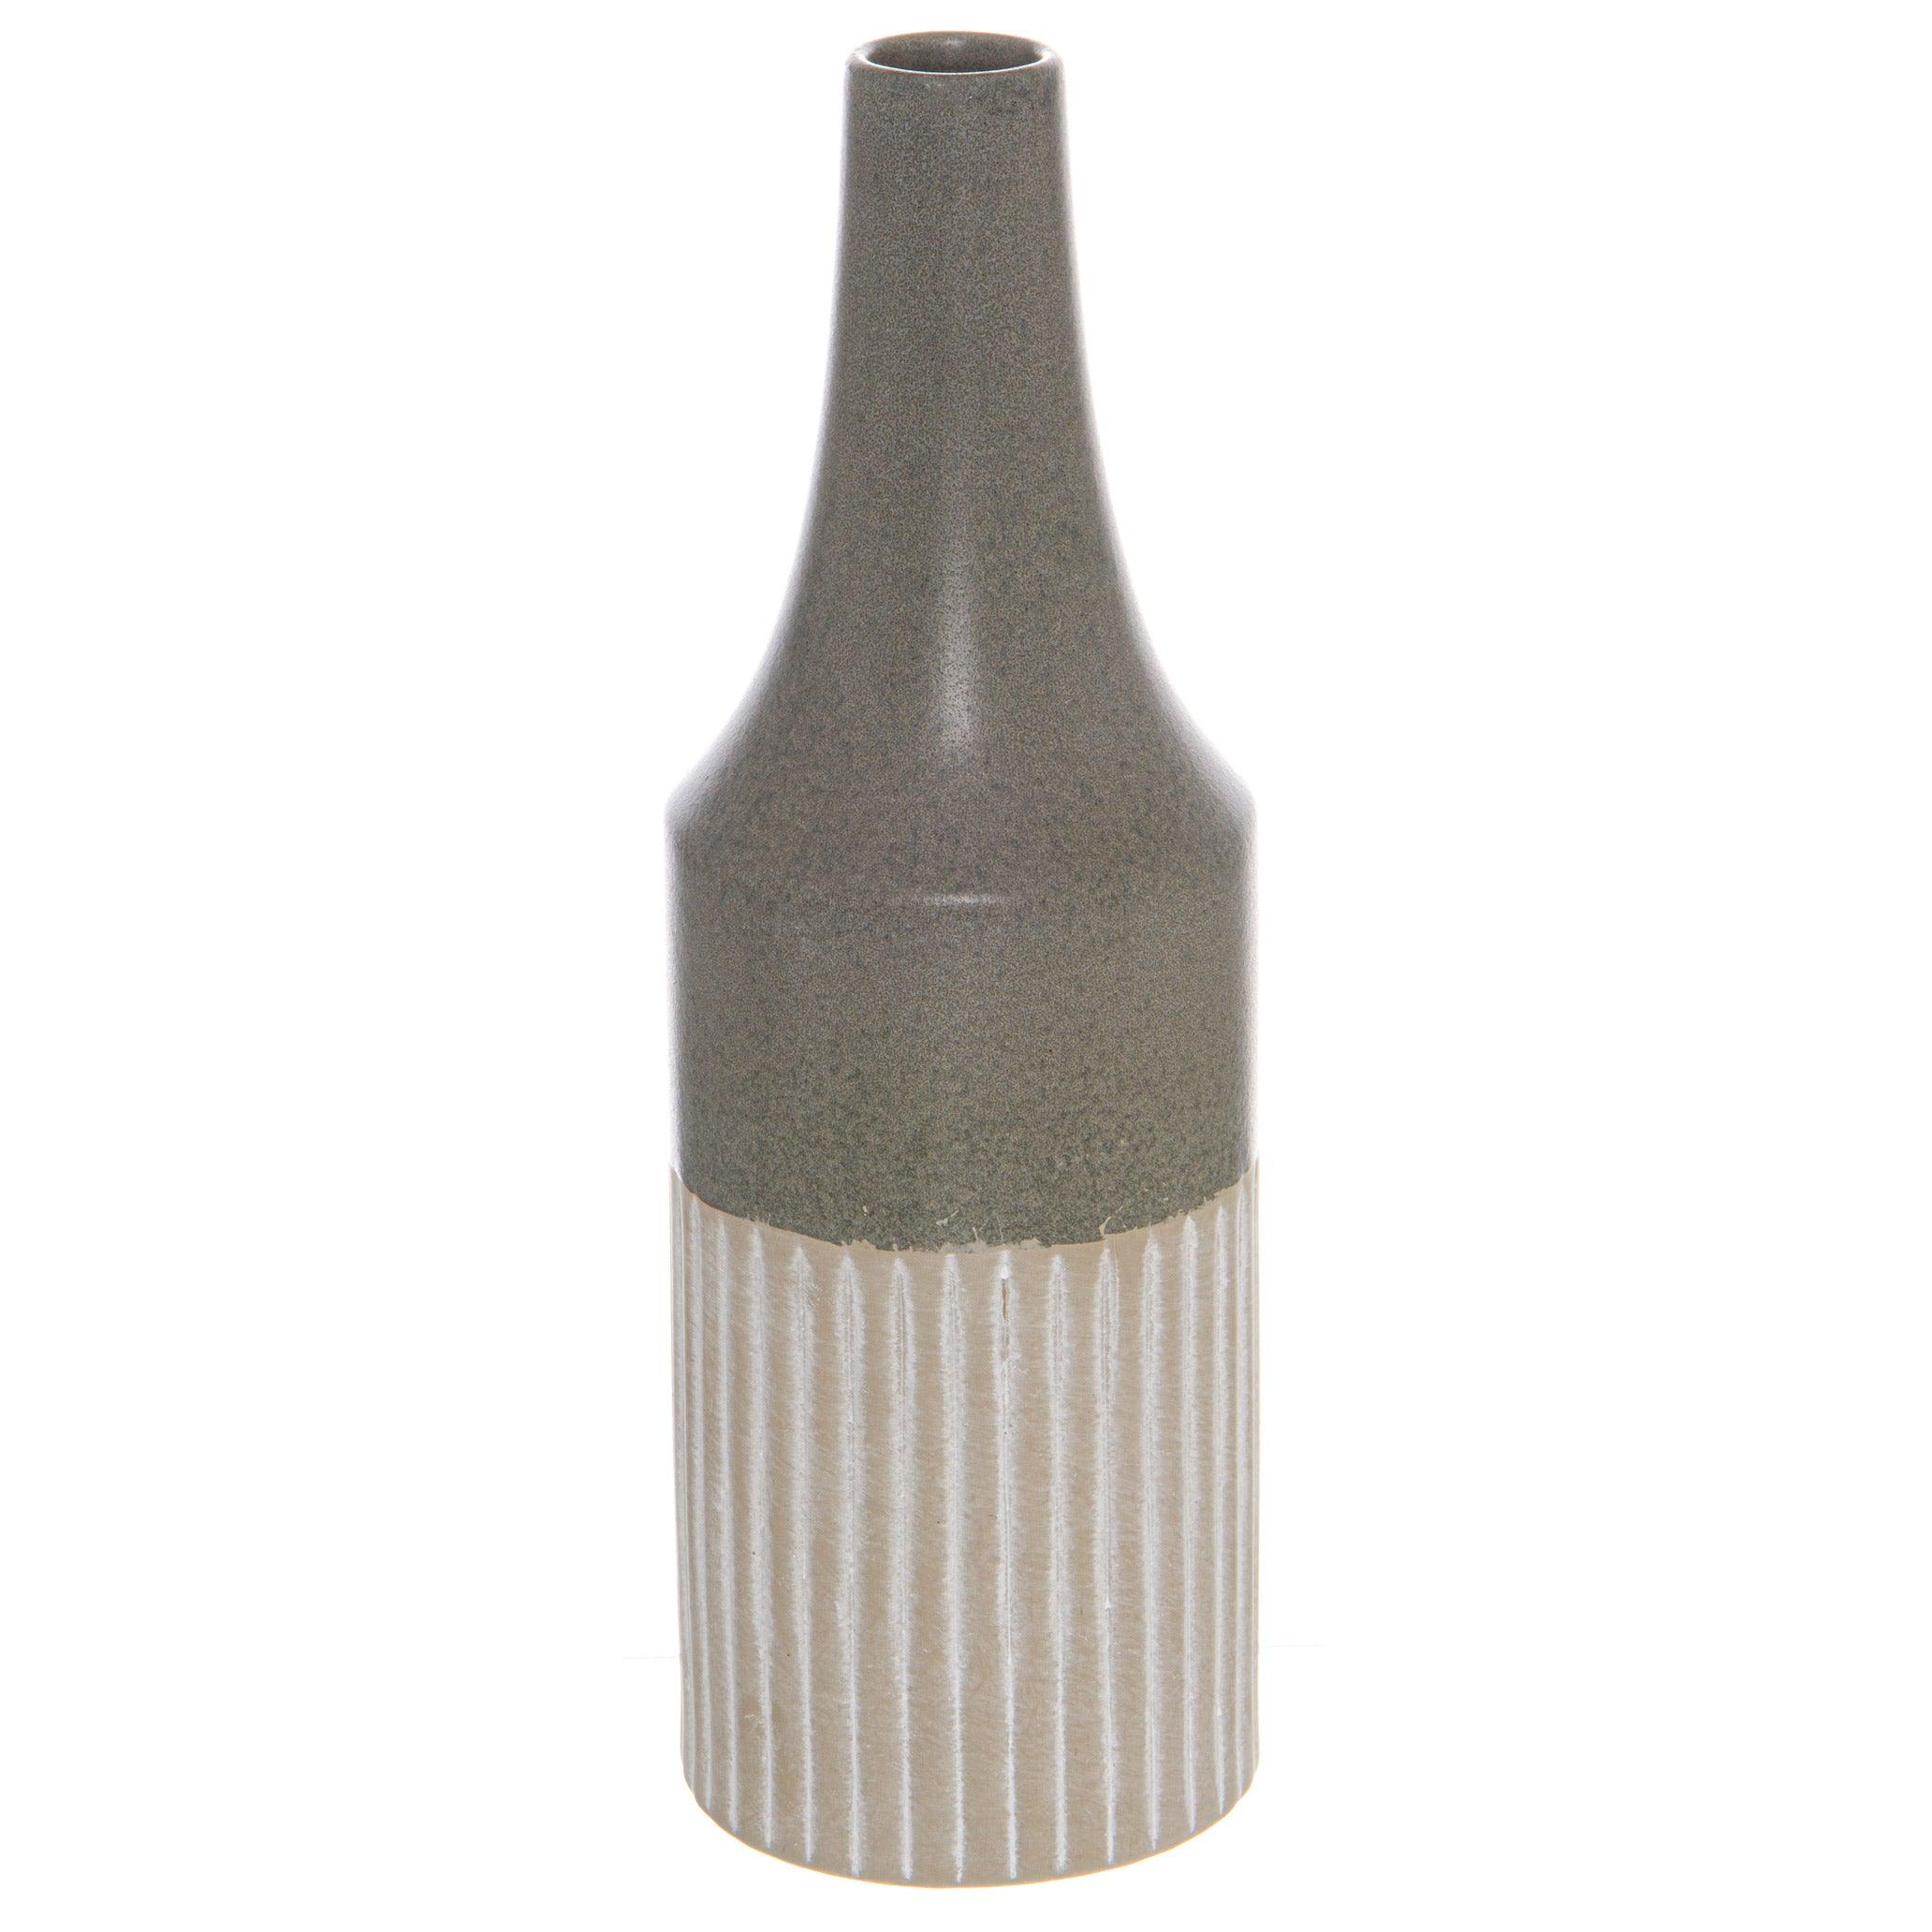 View Mason Collection Grey Ceramic Convex Vase information